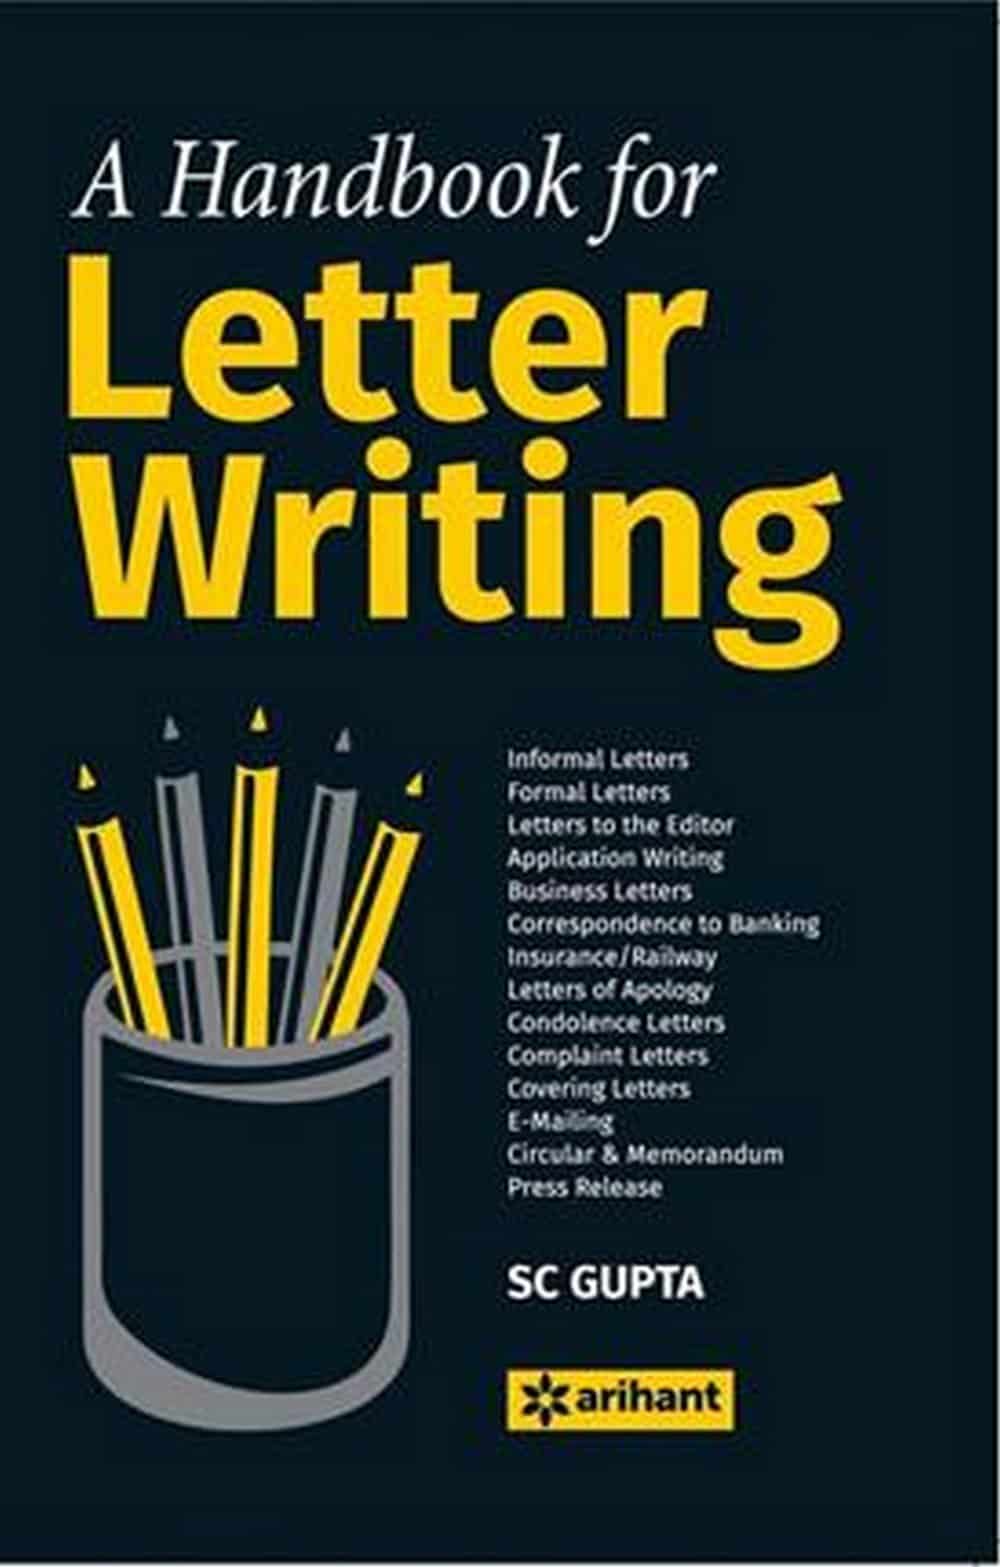 the creative writing handbook pdf